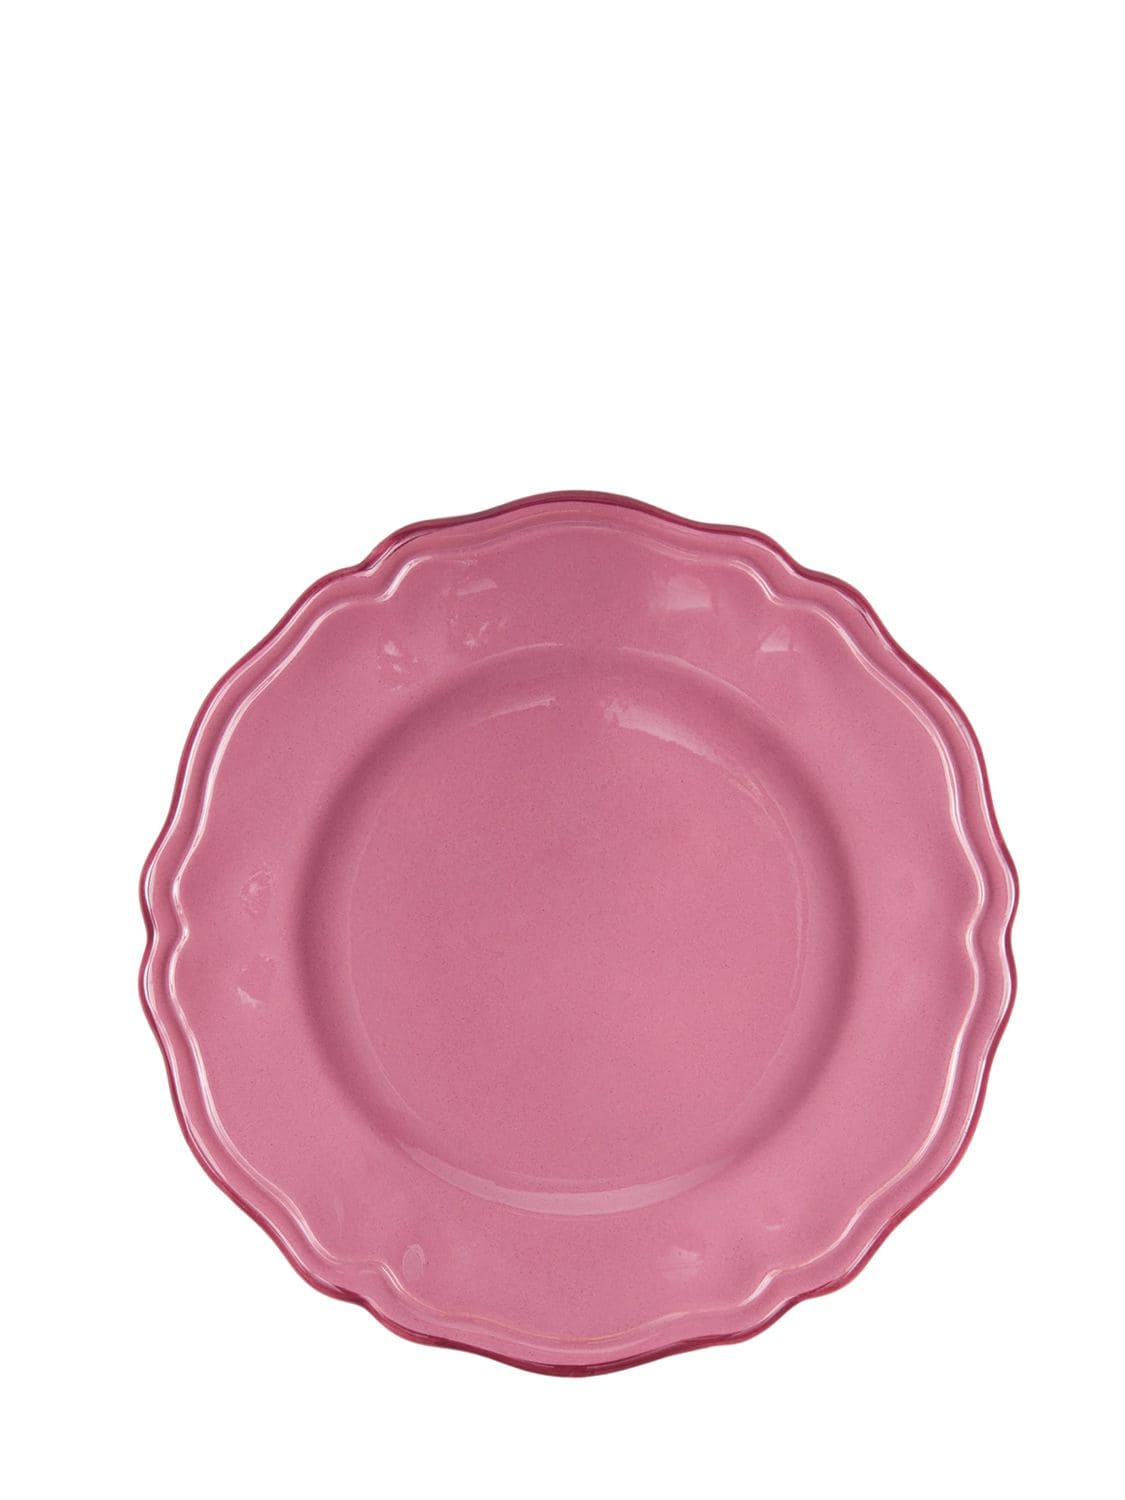 Cabana Iris Dessert Plate In Pink